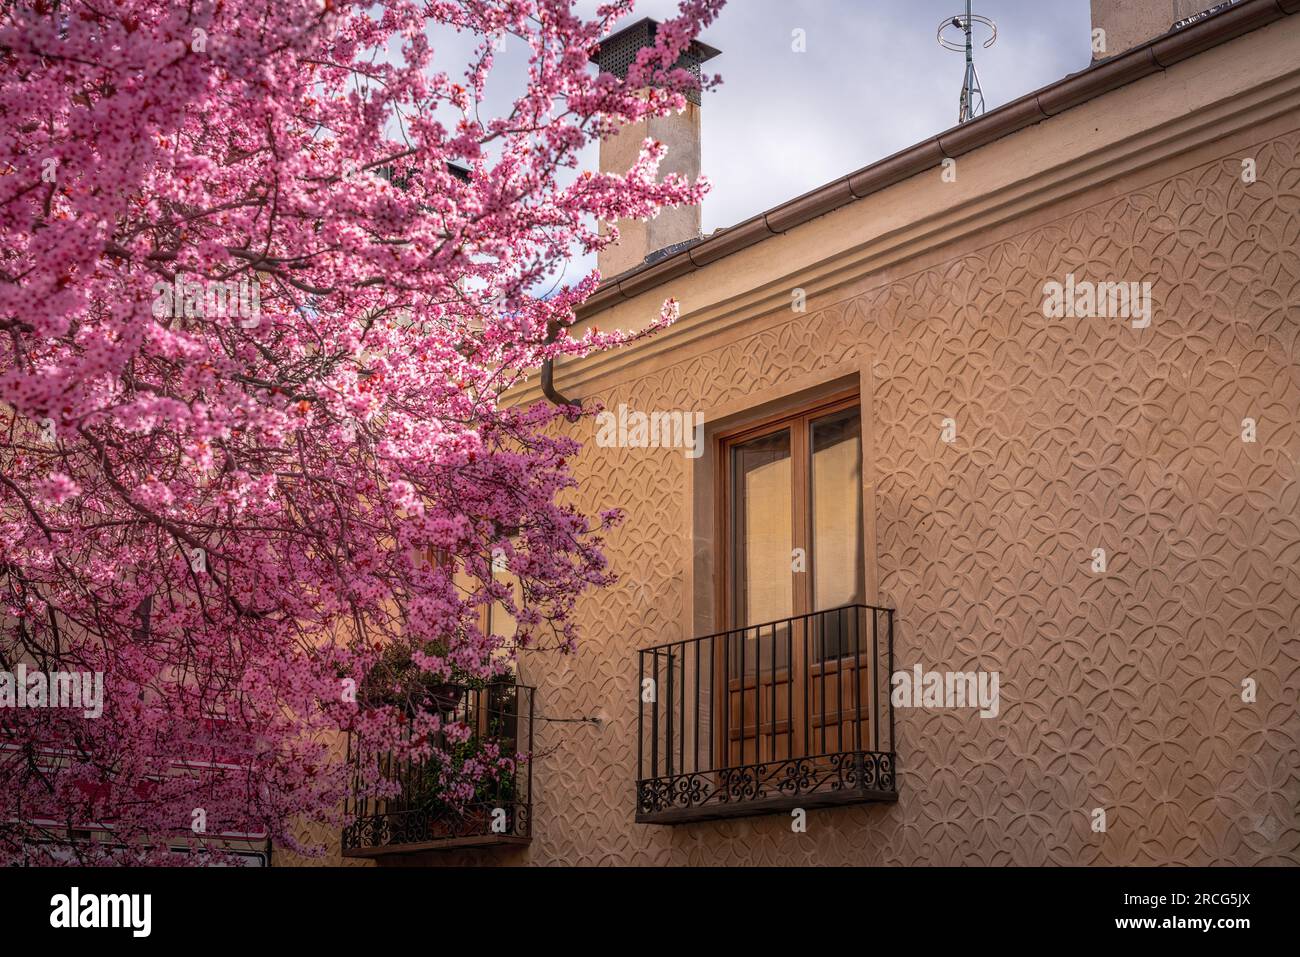 Traditional Segovia Building Facade with Pink Flowers - Segovia, Spain Stock Photo